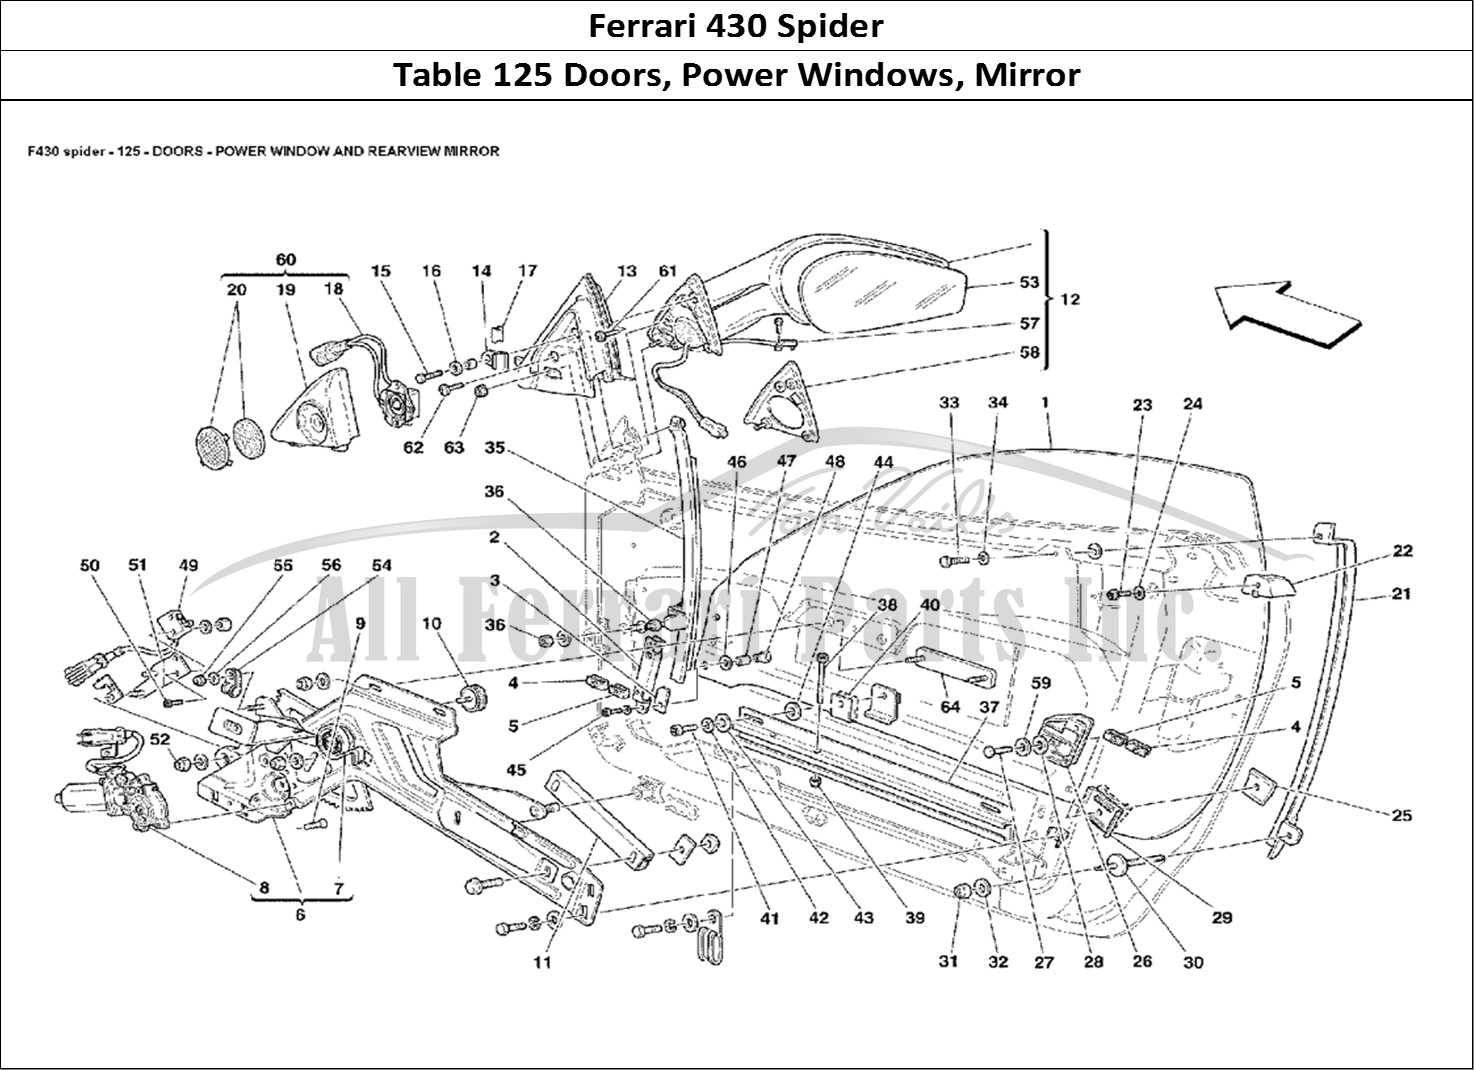 Ferrari Parts Ferrari 430 Spider Page 125 Doors - Power Window and